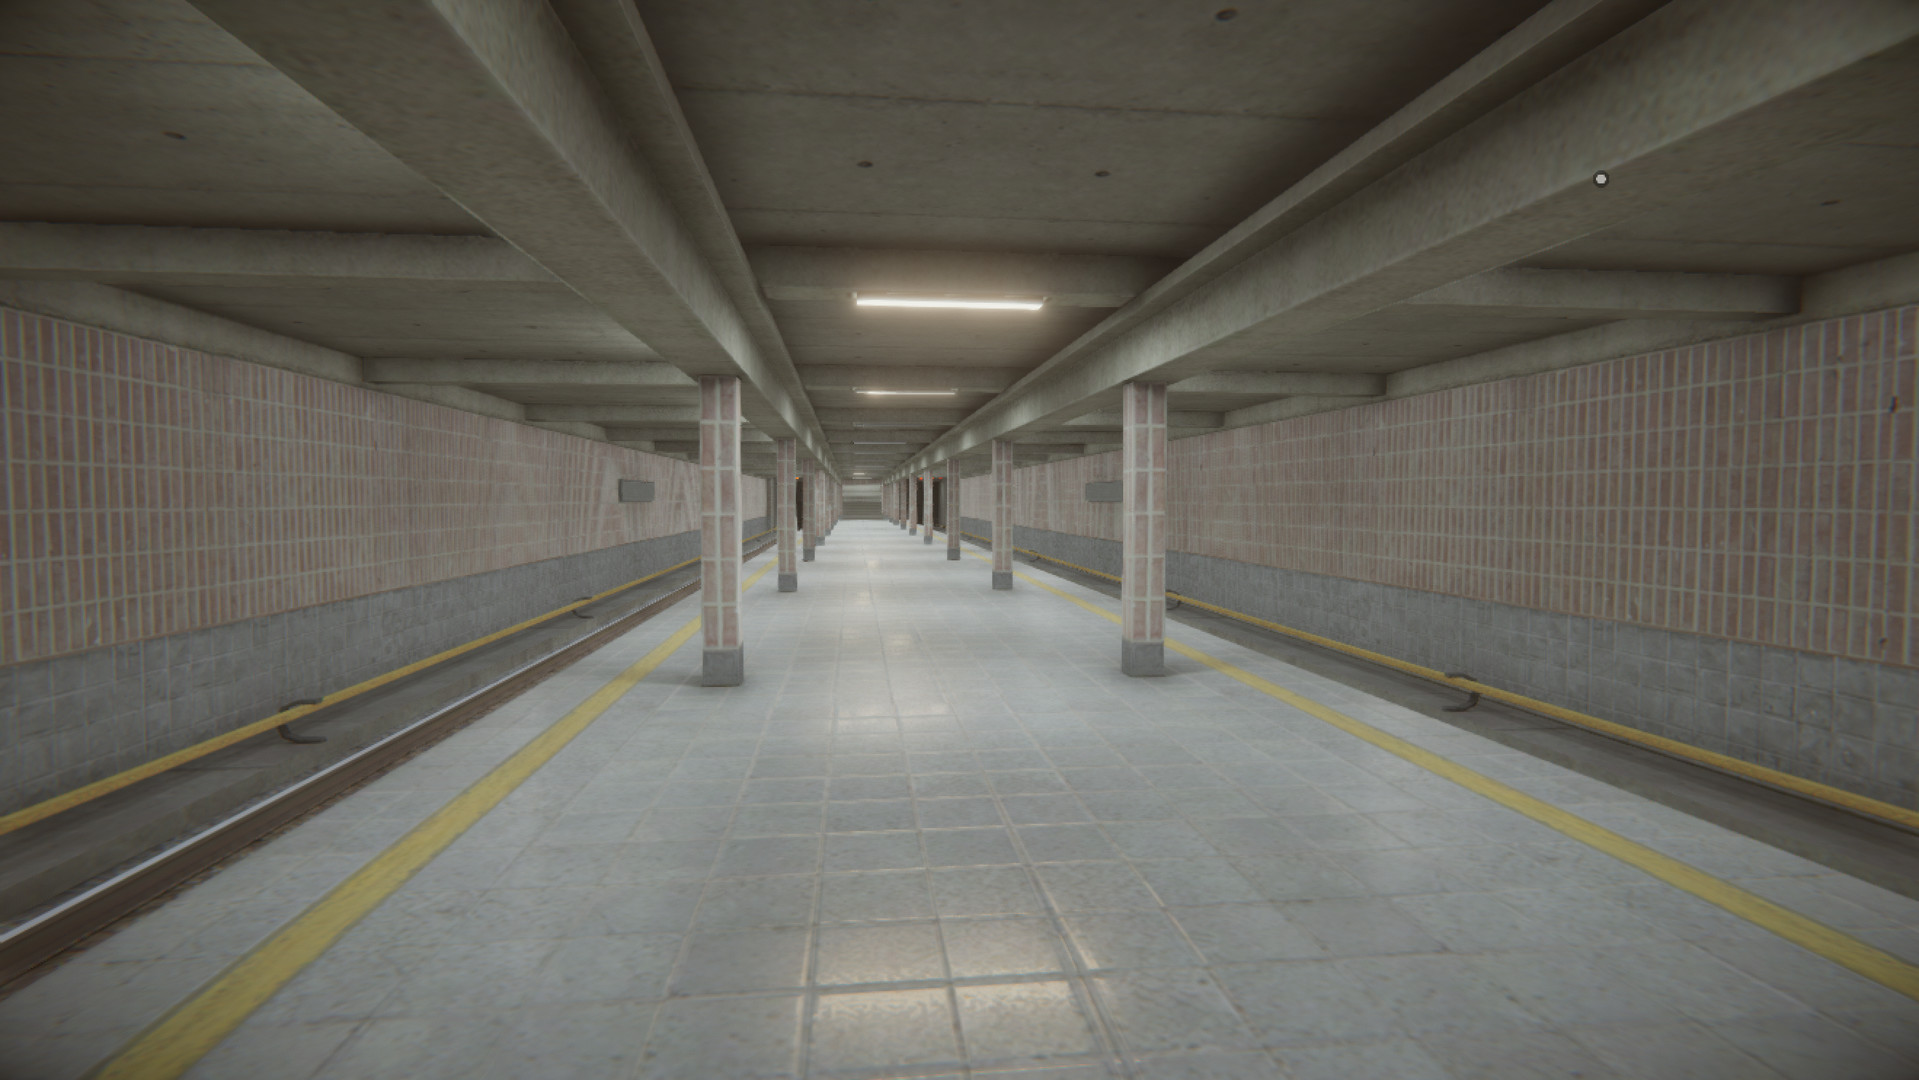 Subway Simulator Free Download